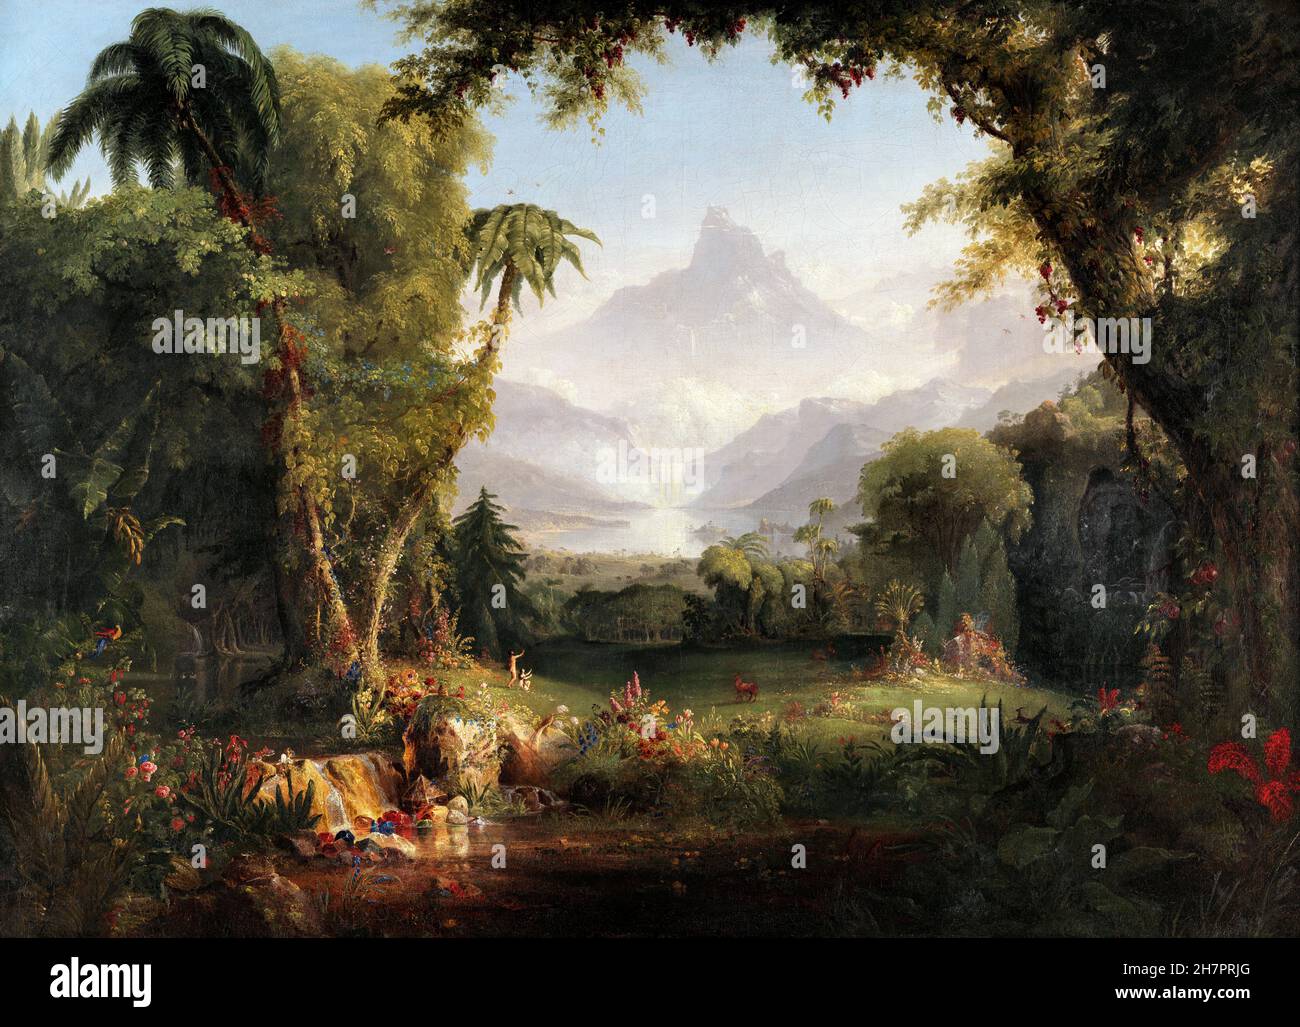 The Garden of Eden von Thomas Cole (1801-1848), Öl auf Leinwand, 1828 Stockfoto